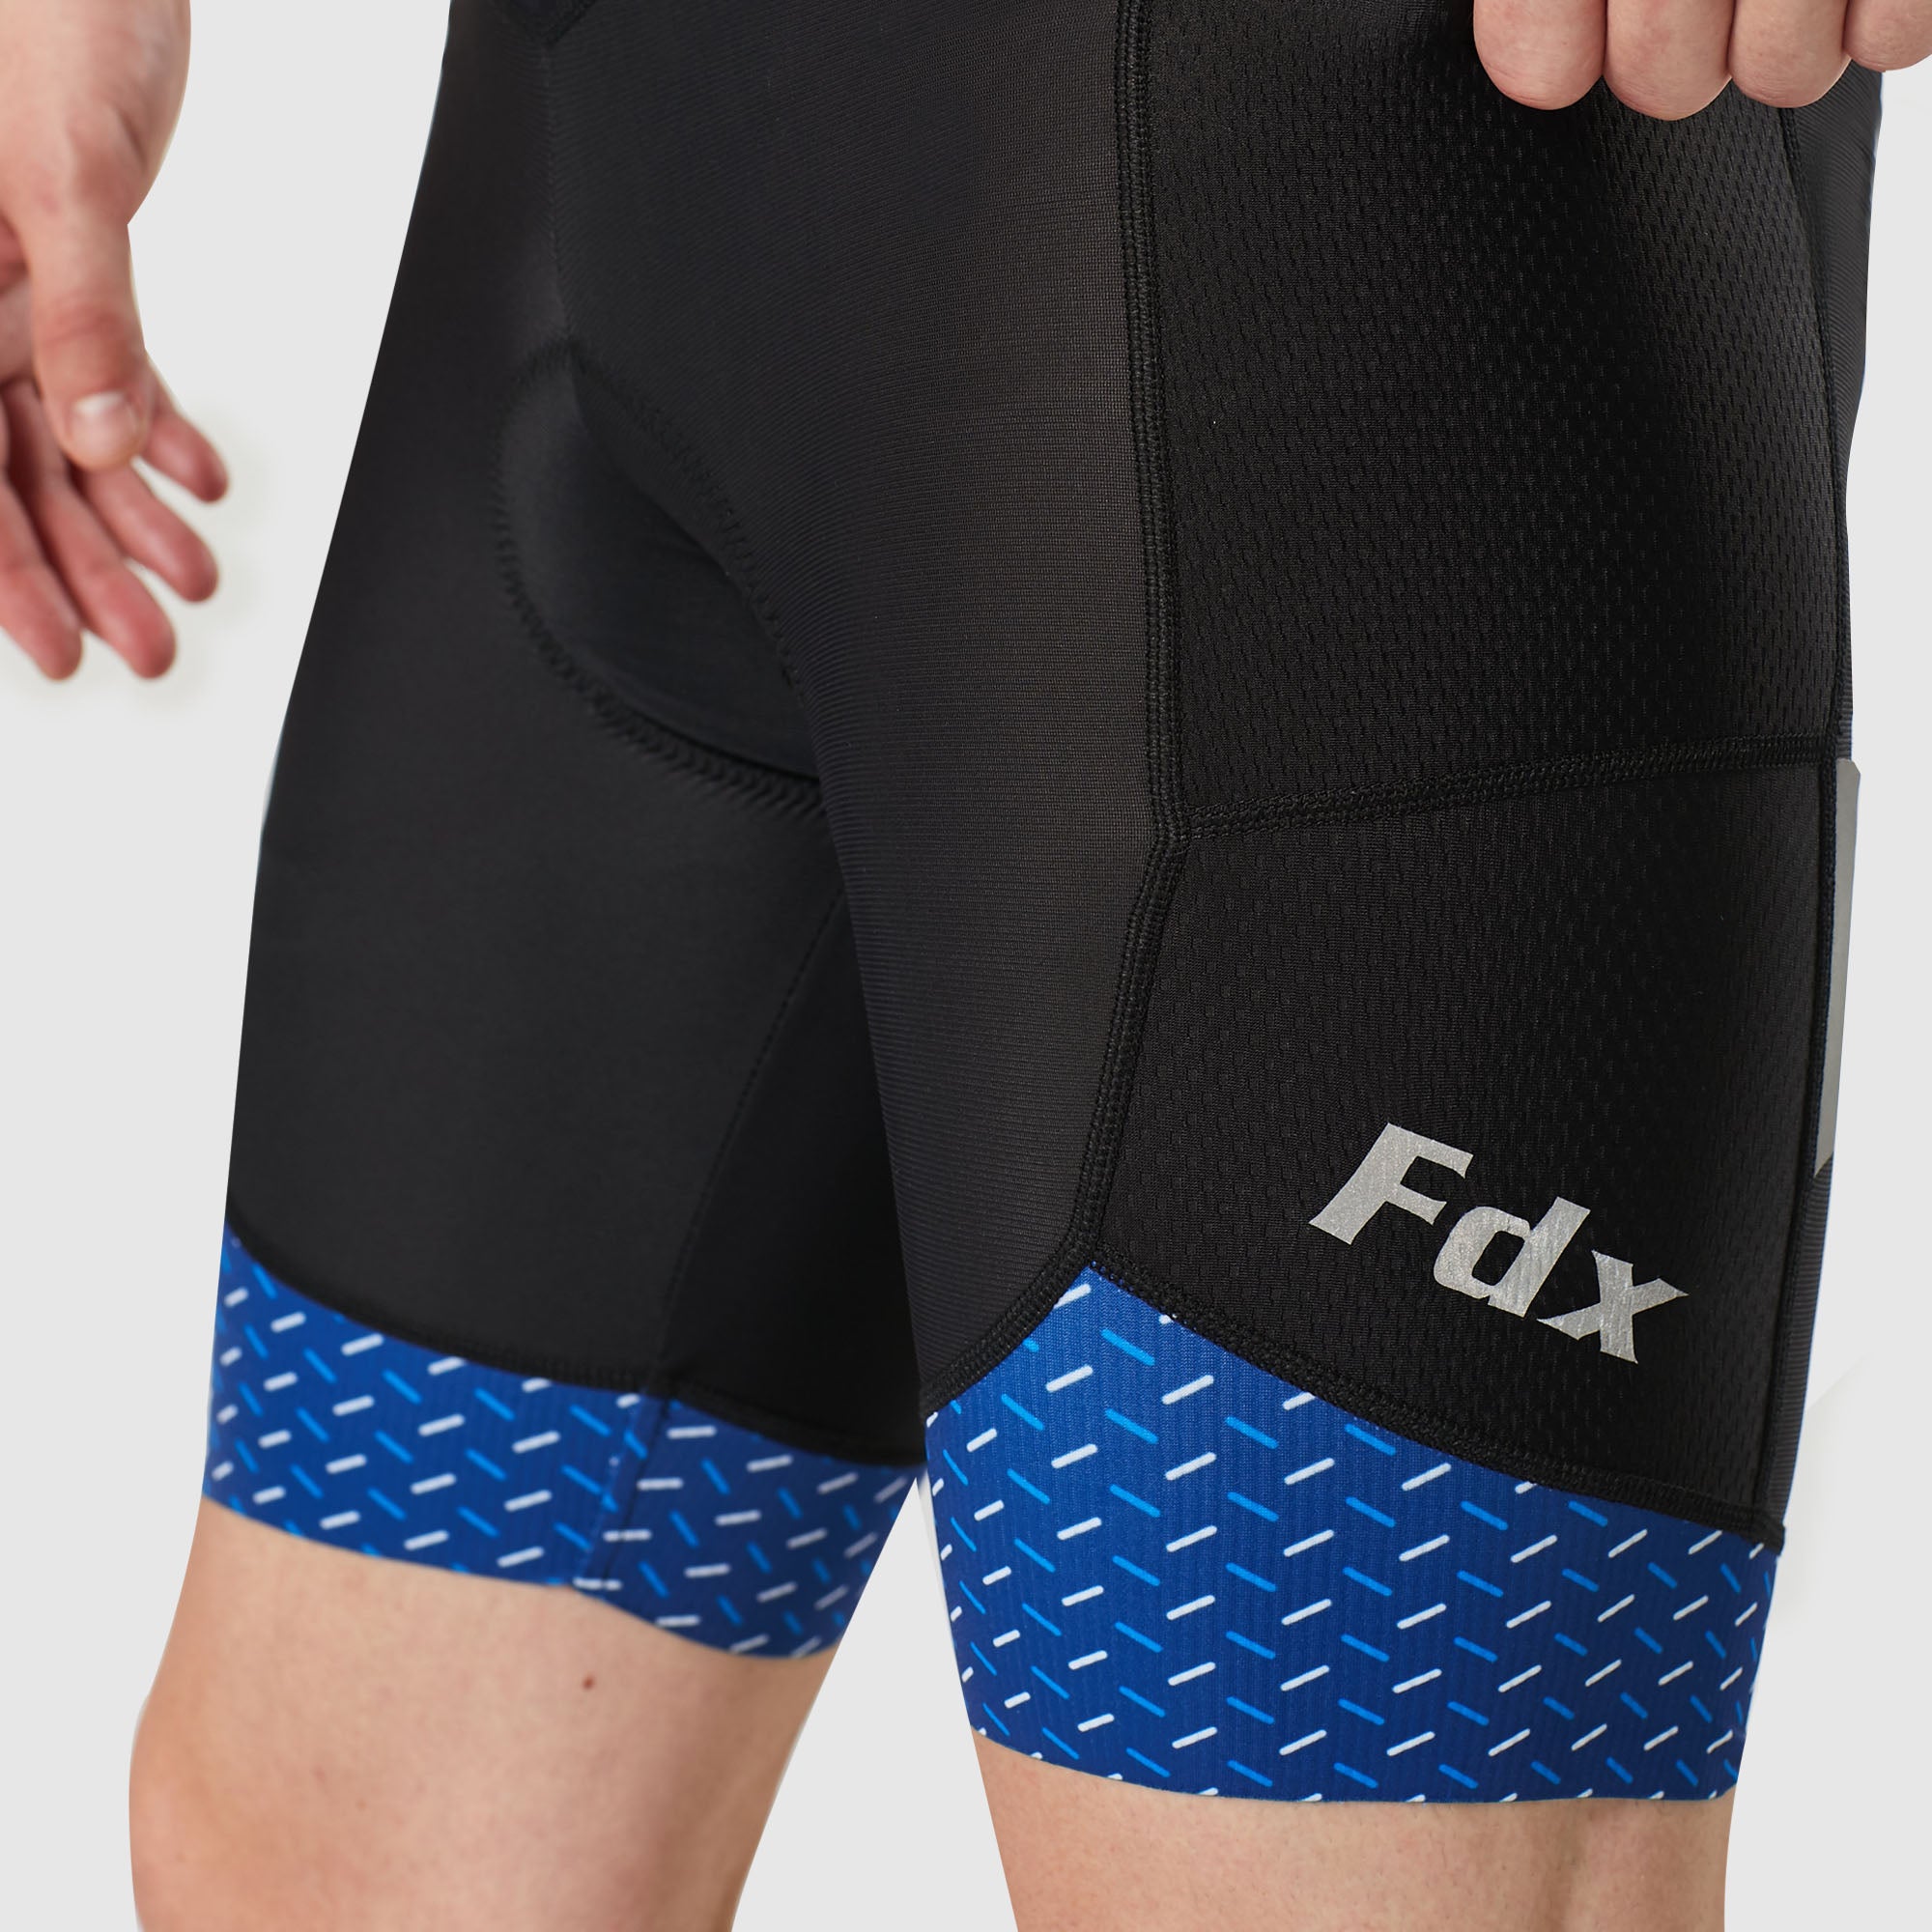 Fdx Windrift Men's Padded Summer Cycling Shorts White & Blue